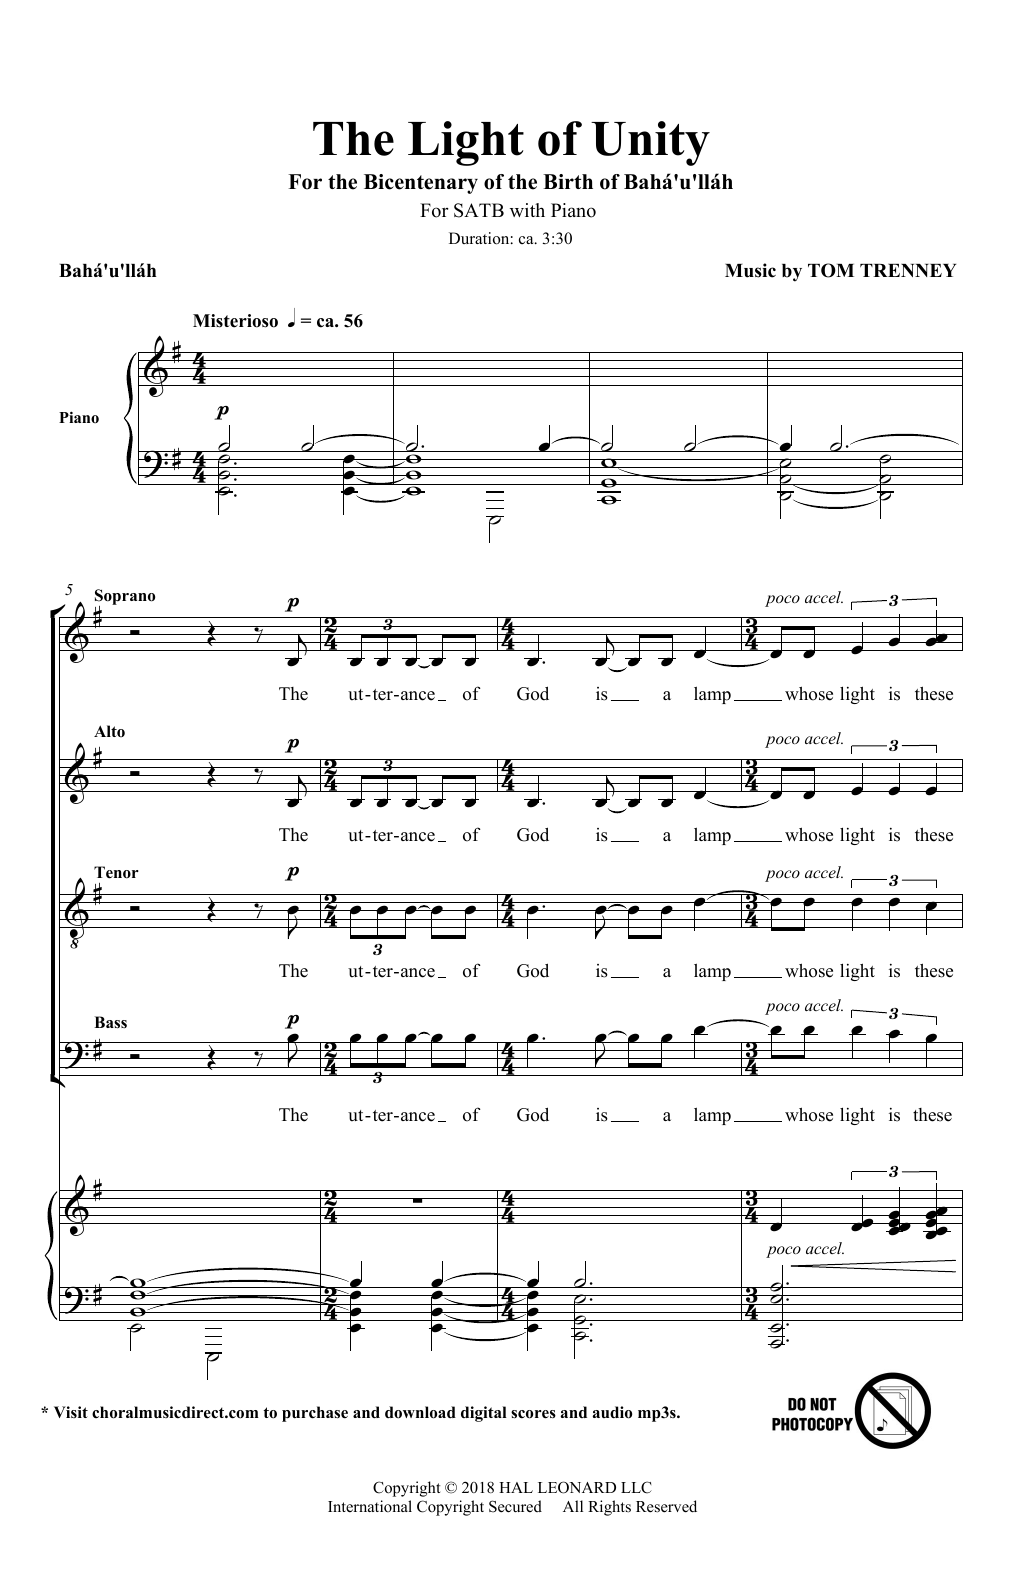 Baha''u''llah & Tom Trenney The Light Of Unity Sheet Music Notes & Chords for SATB Choir - Download or Print PDF